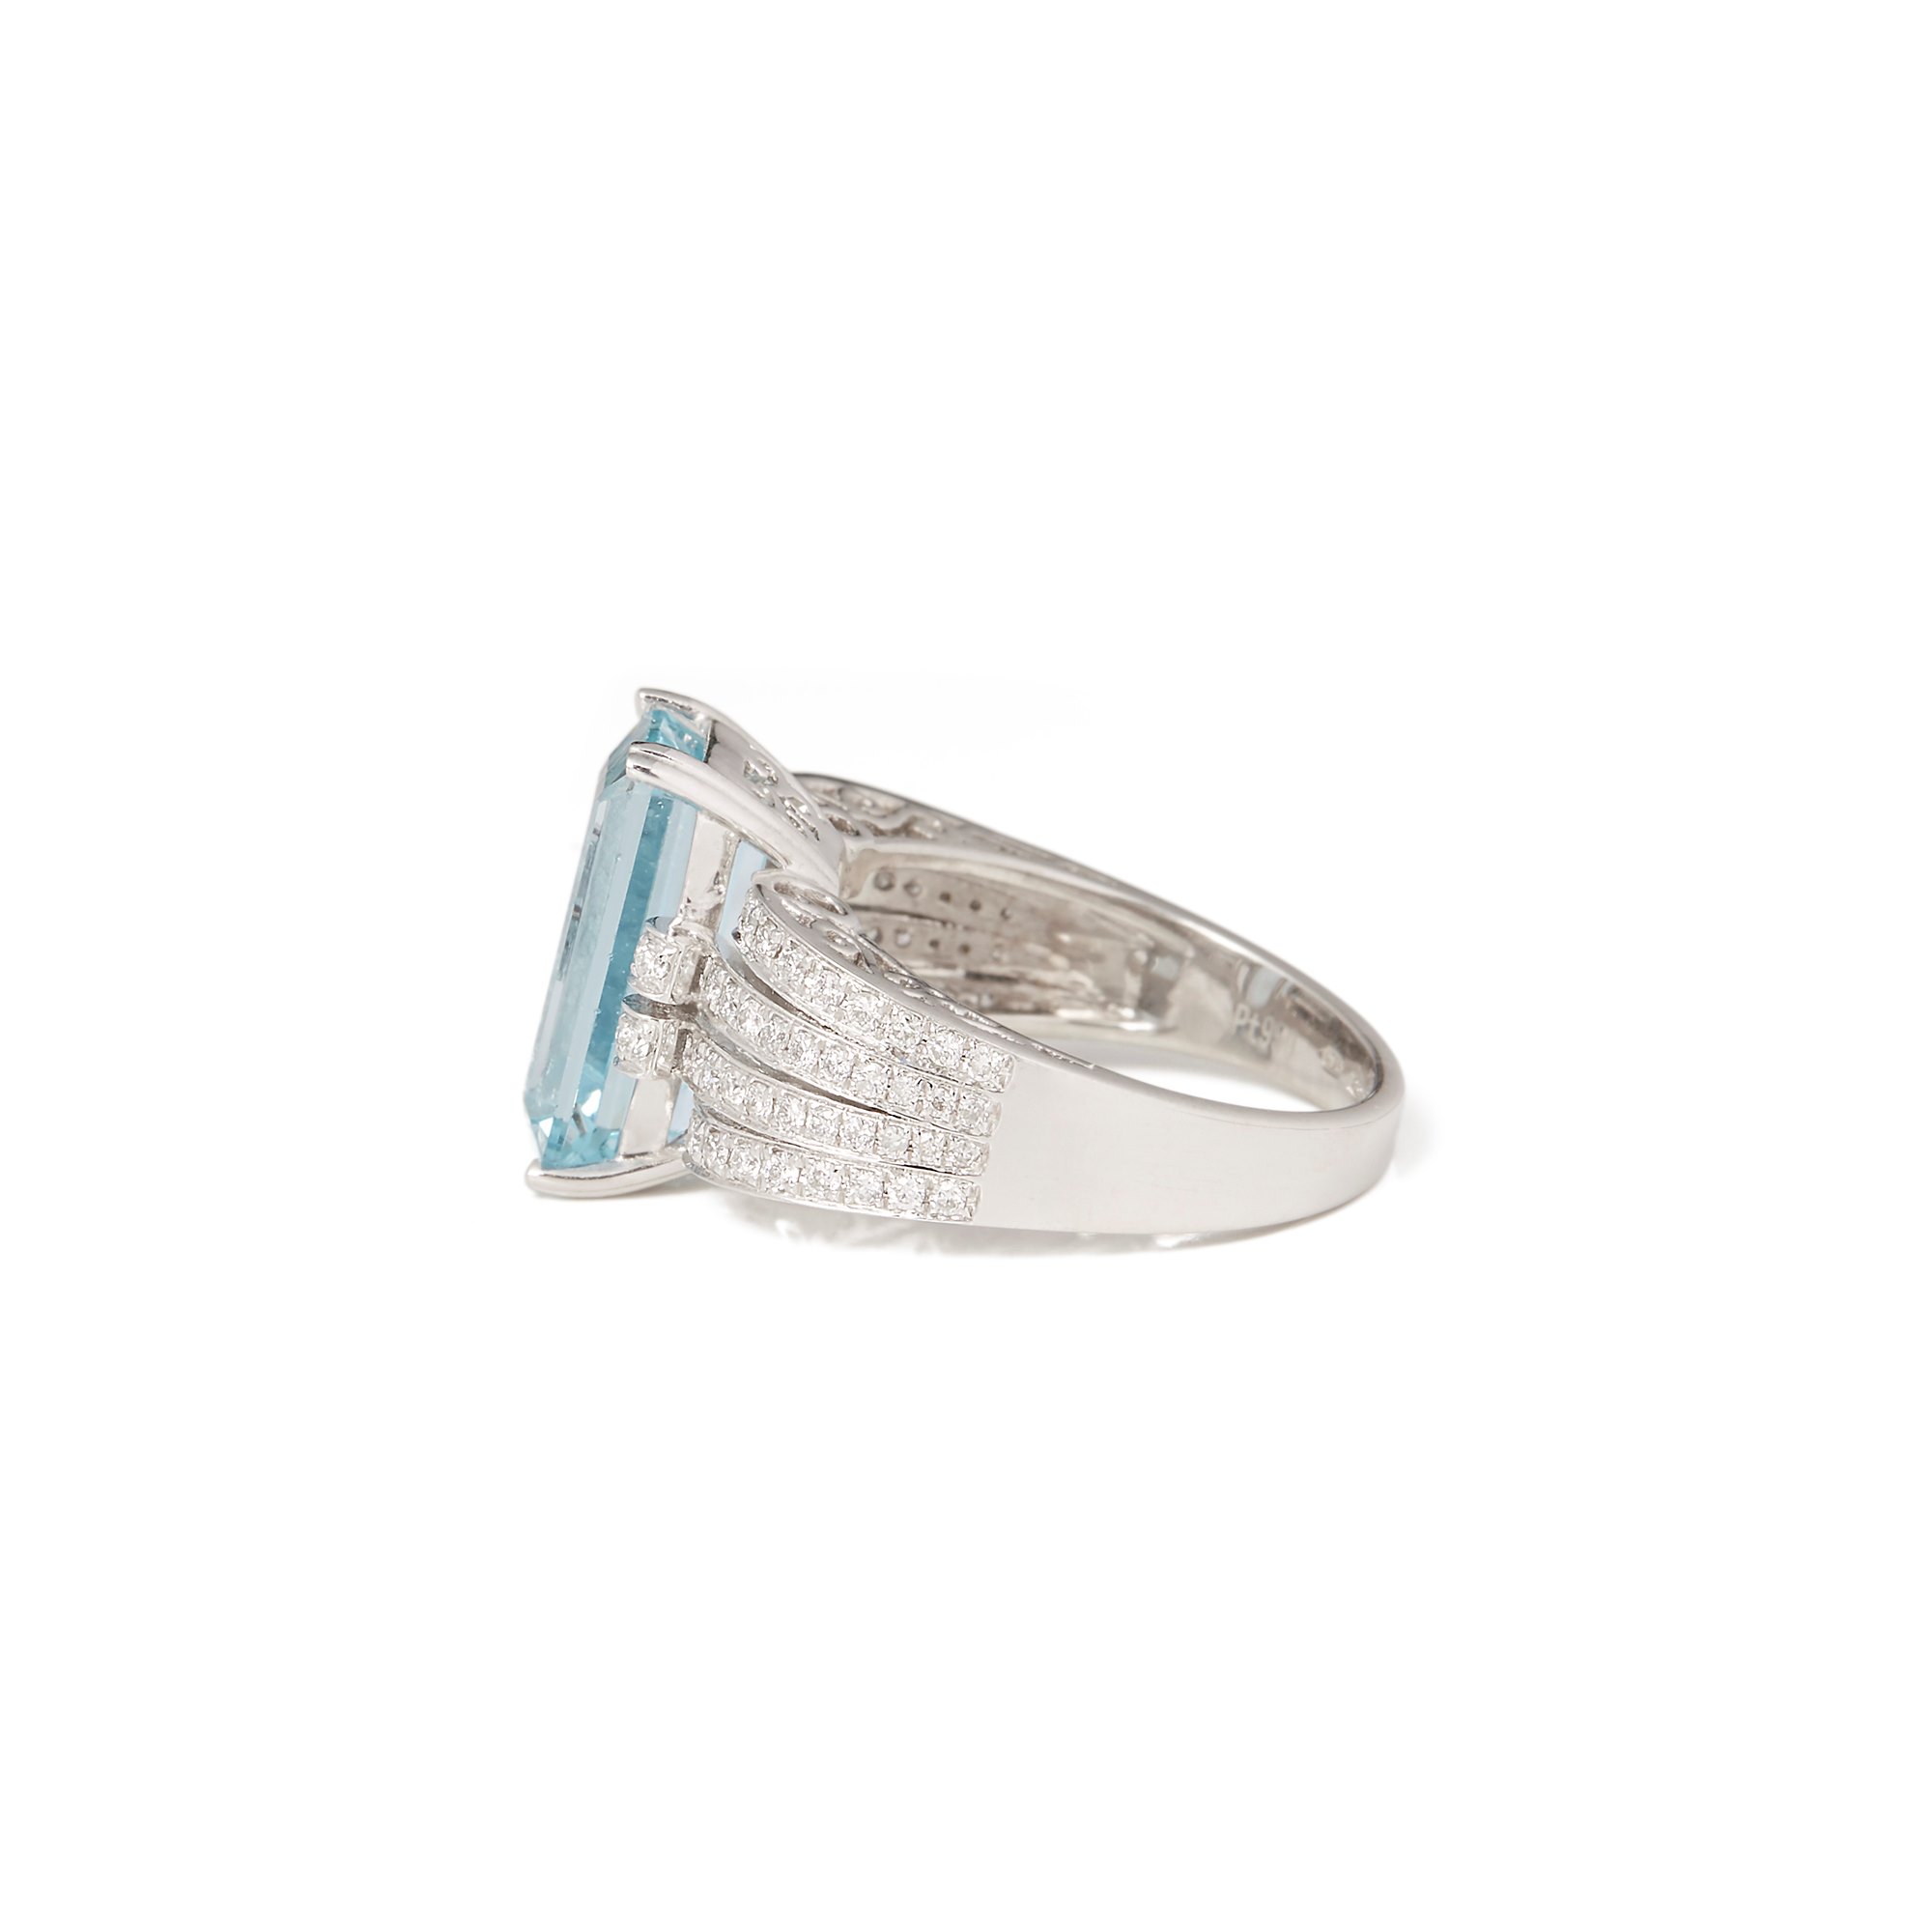 David Jerome Certified 4.58ct Emerald Cut Brazilian Aquamarine and Diamond Ring